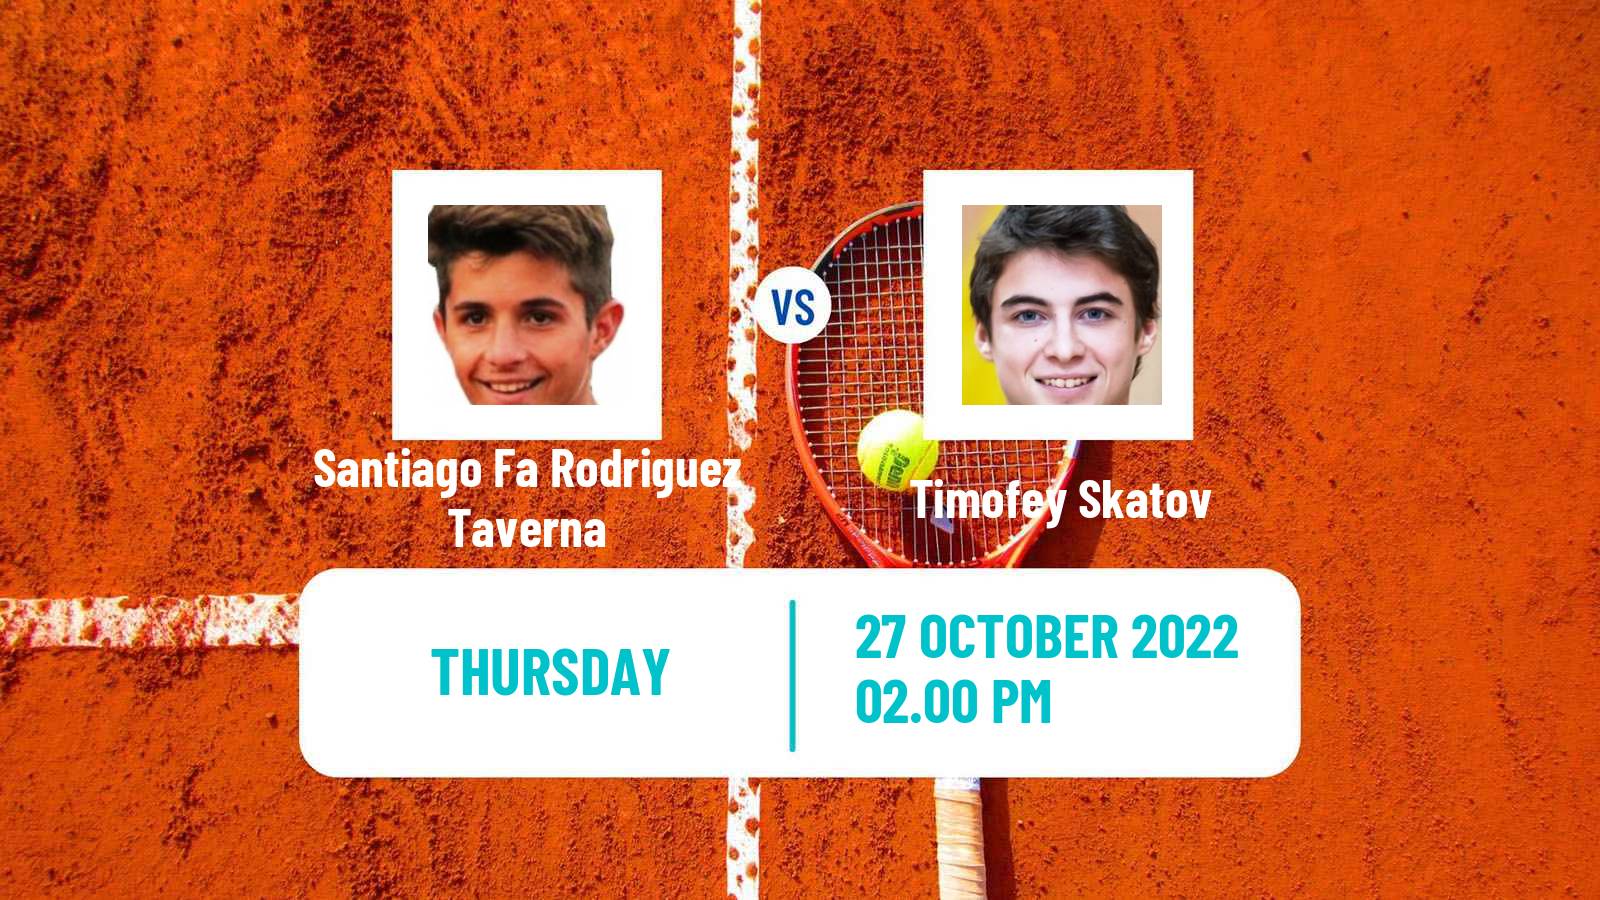 Tennis ATP Challenger Santiago Fa Rodriguez Taverna - Timofey Skatov